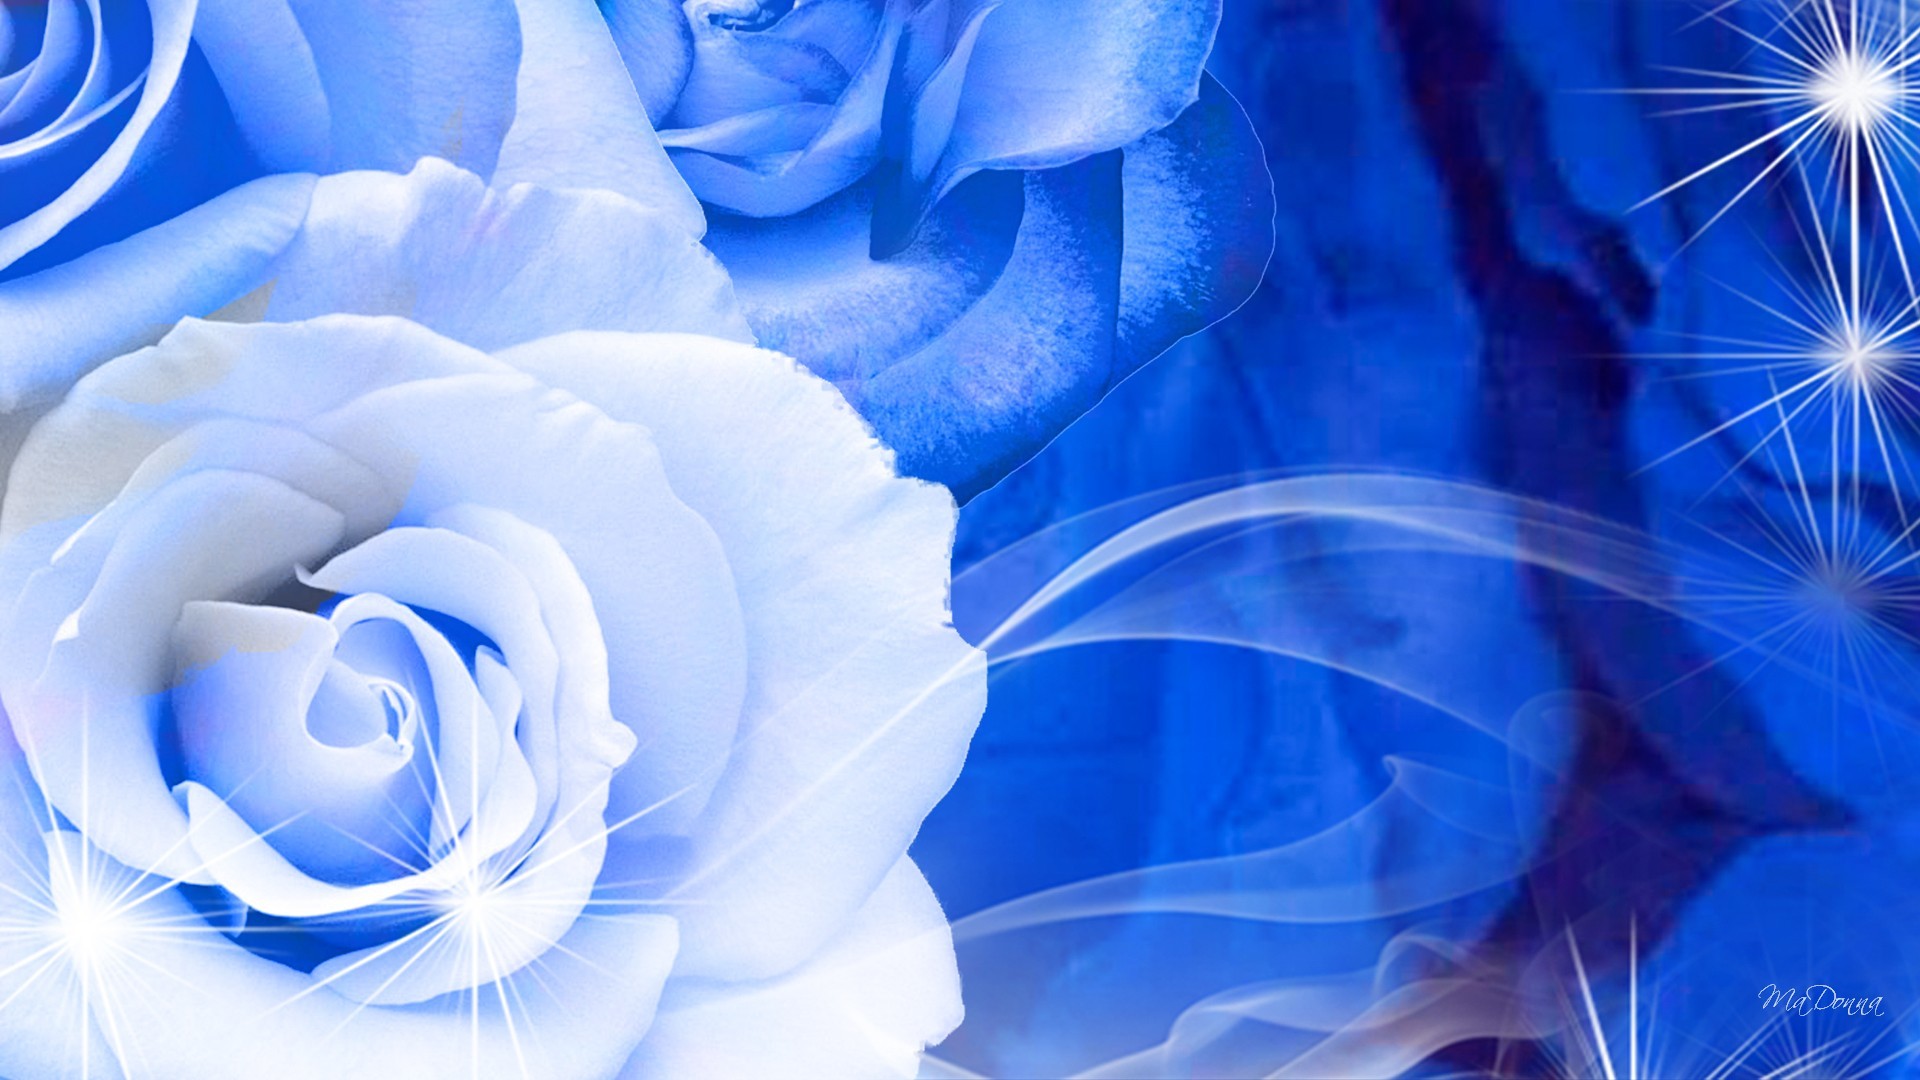 1920x1080 blue-and-white-rose-wallpaper-6-hd-wallpaper.jpg (1920Ã1080) | Flowers |  Pinterest | Blue wallpapers, Wallpaper and Flower wallpaper